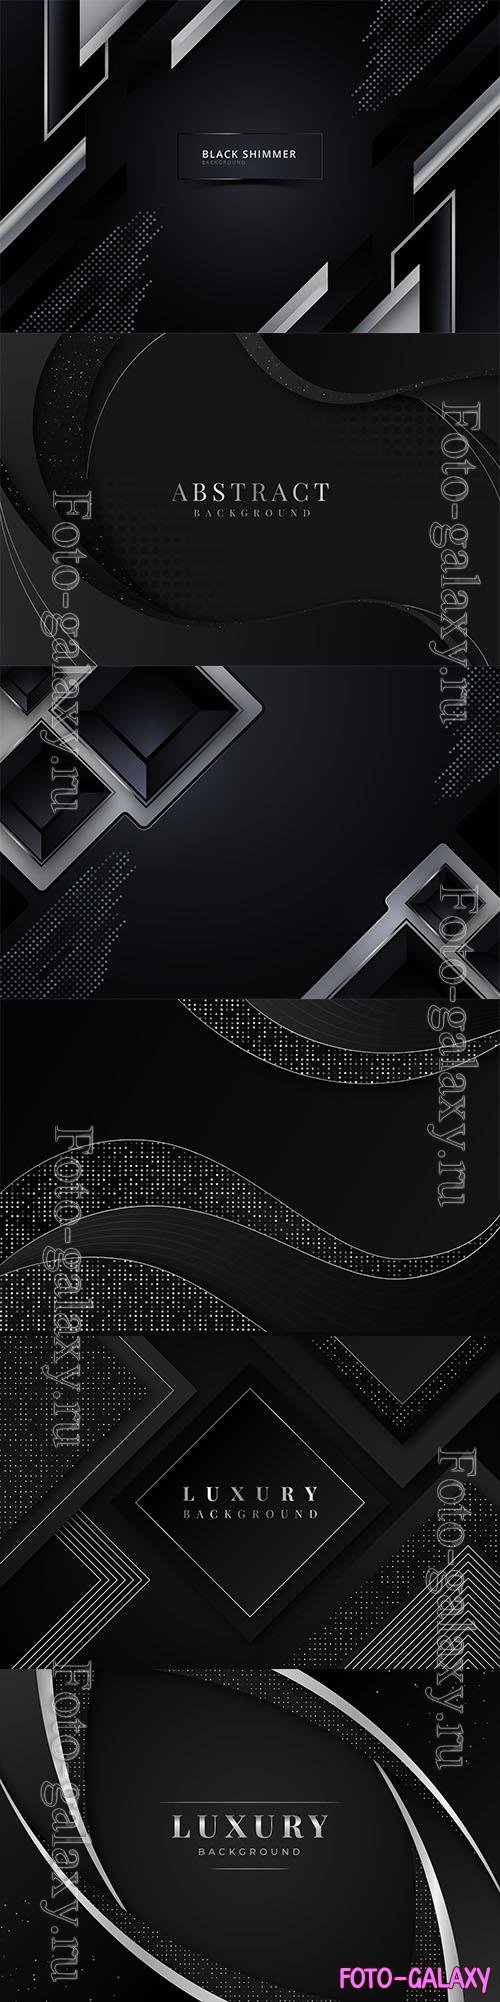 Black abstrack realistic shimmer background